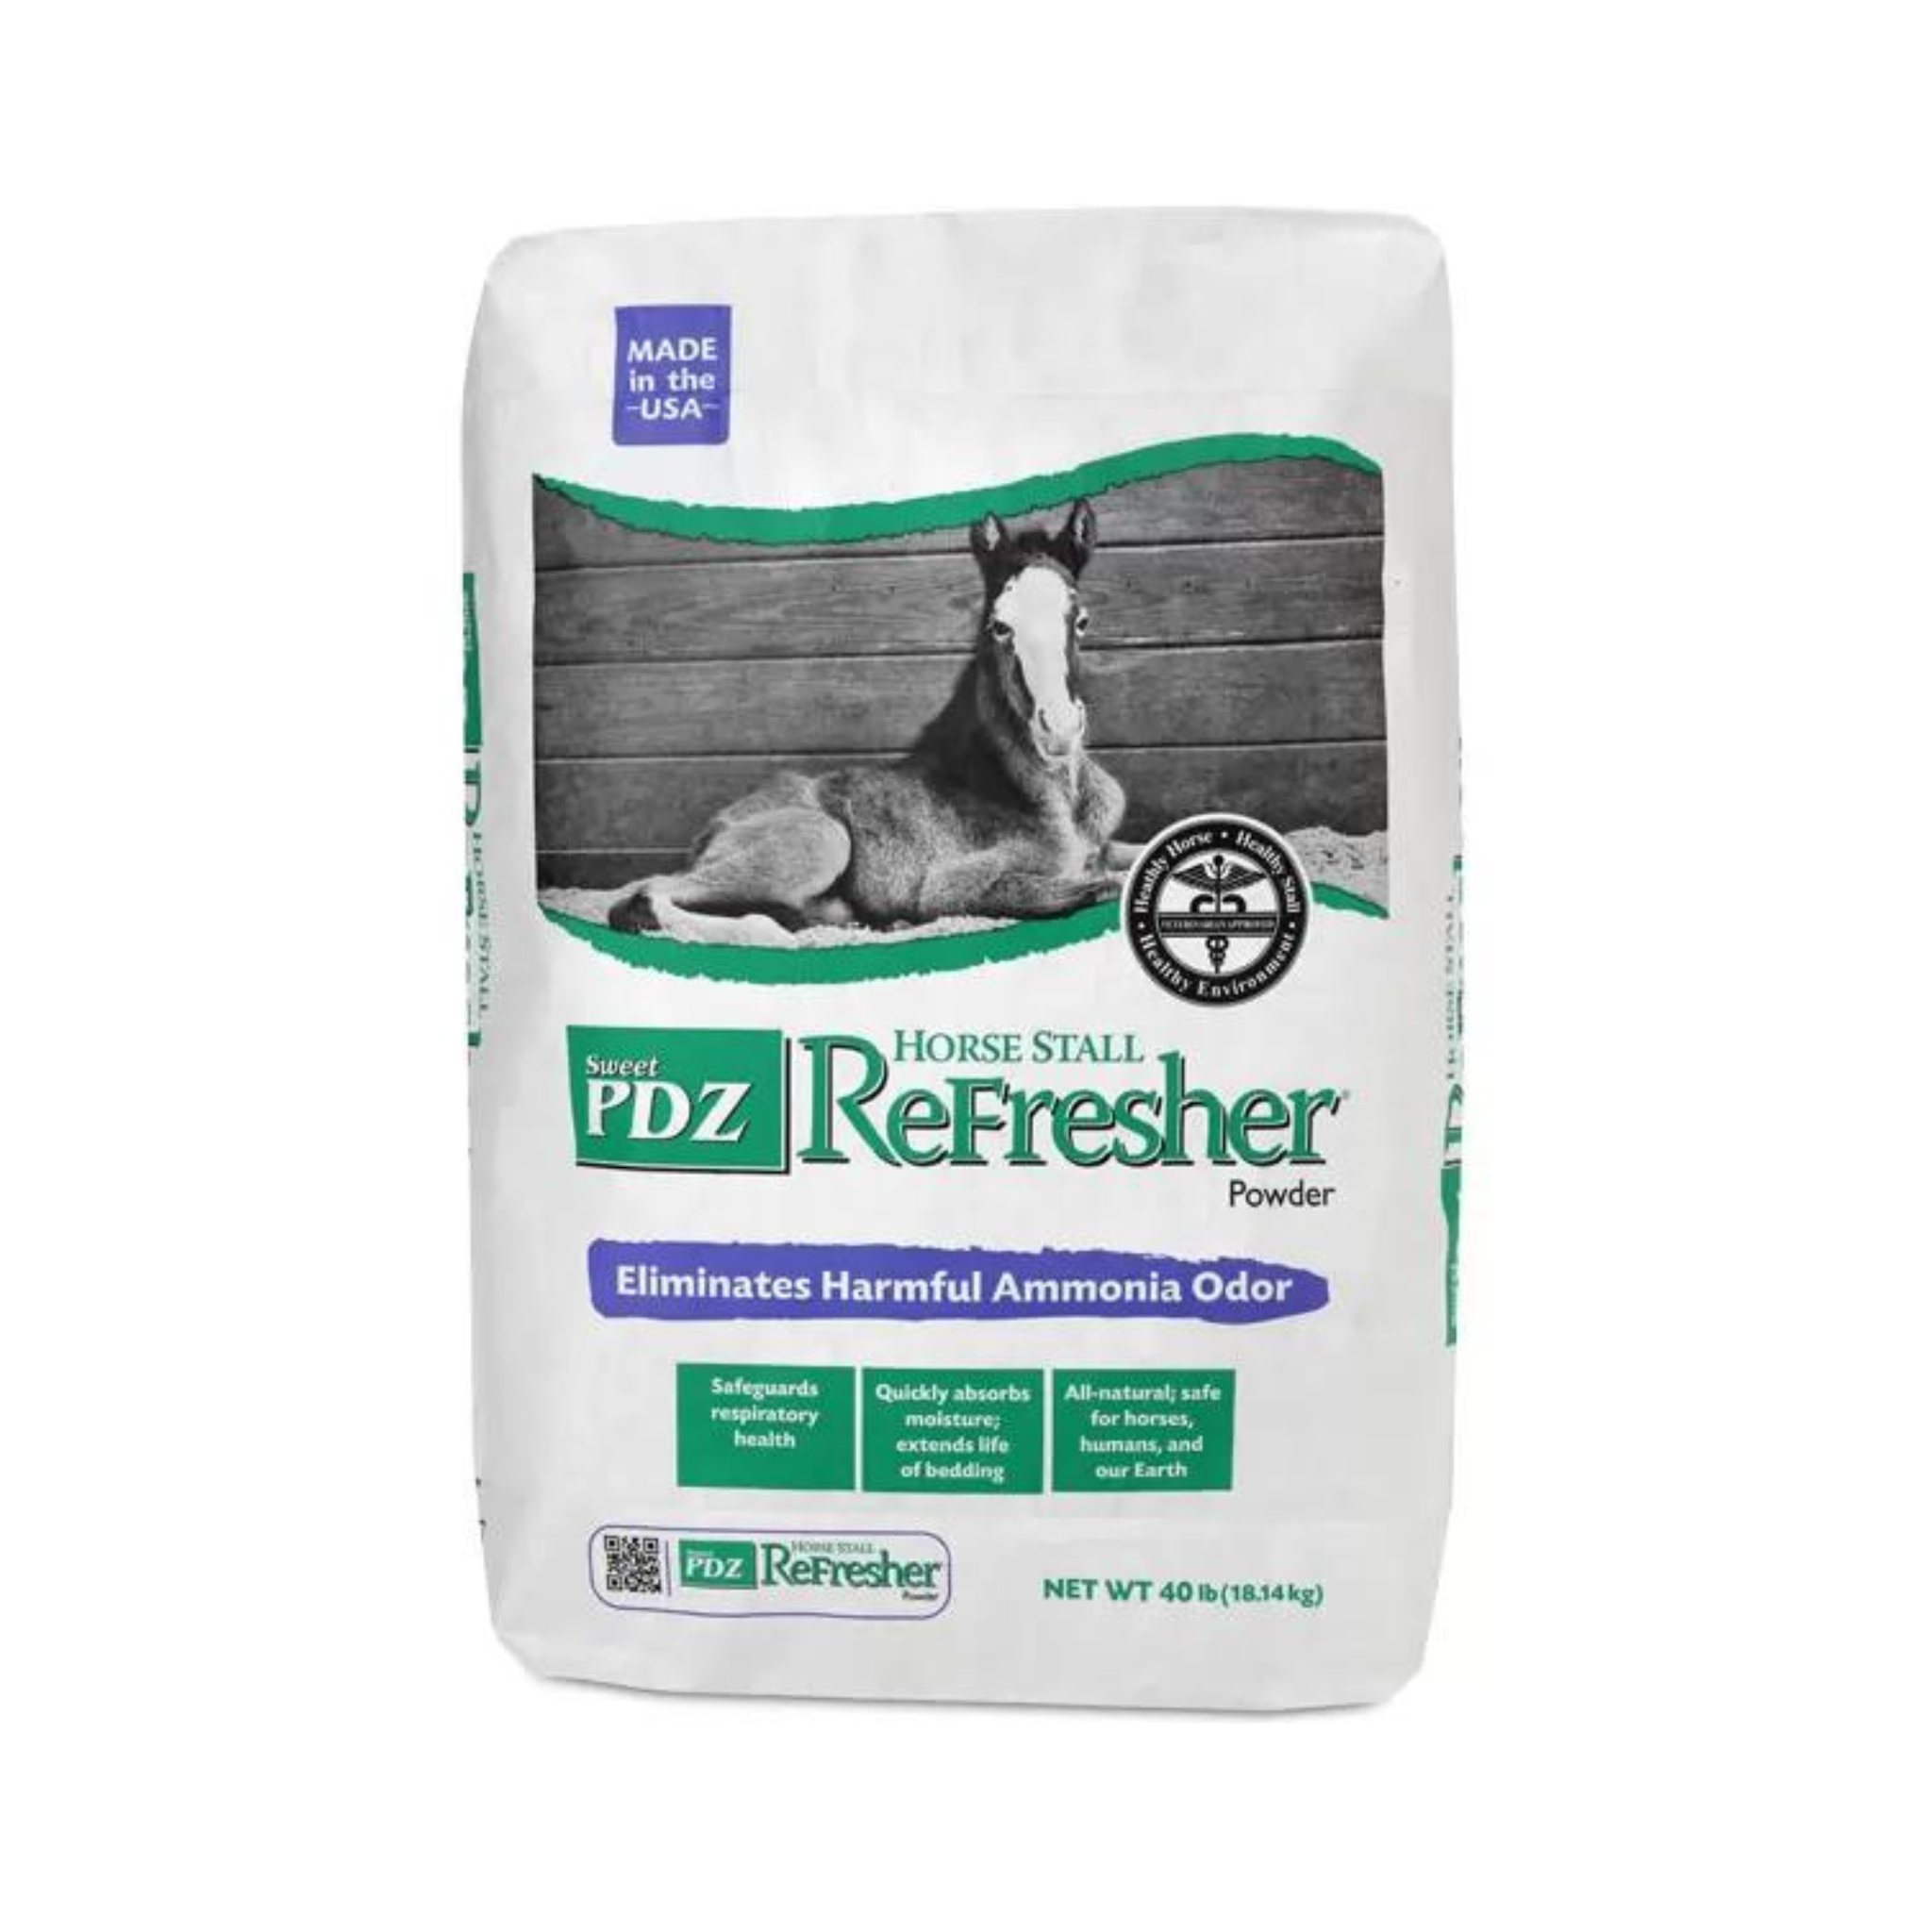 Sweet PDZ Powder Stall Refresher Odor Eliminator